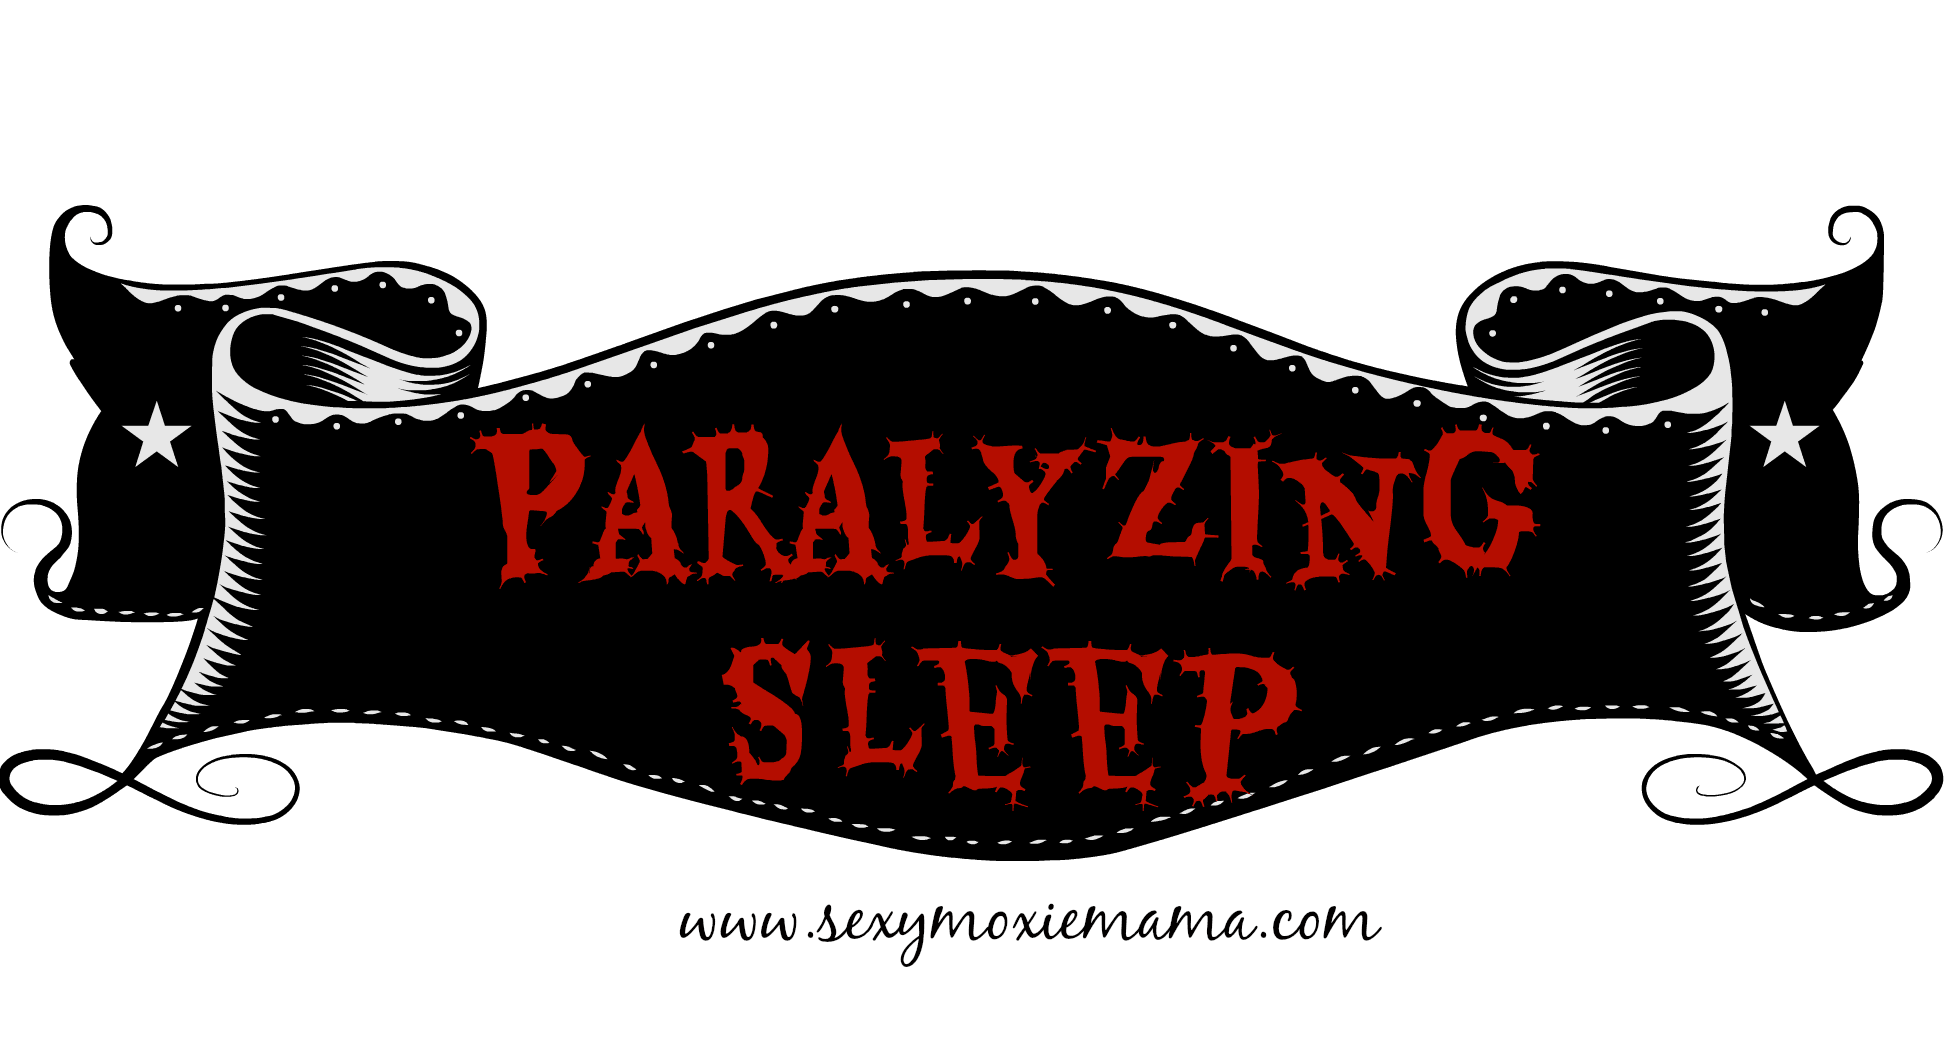 sleep-paralysis-narcolepsy